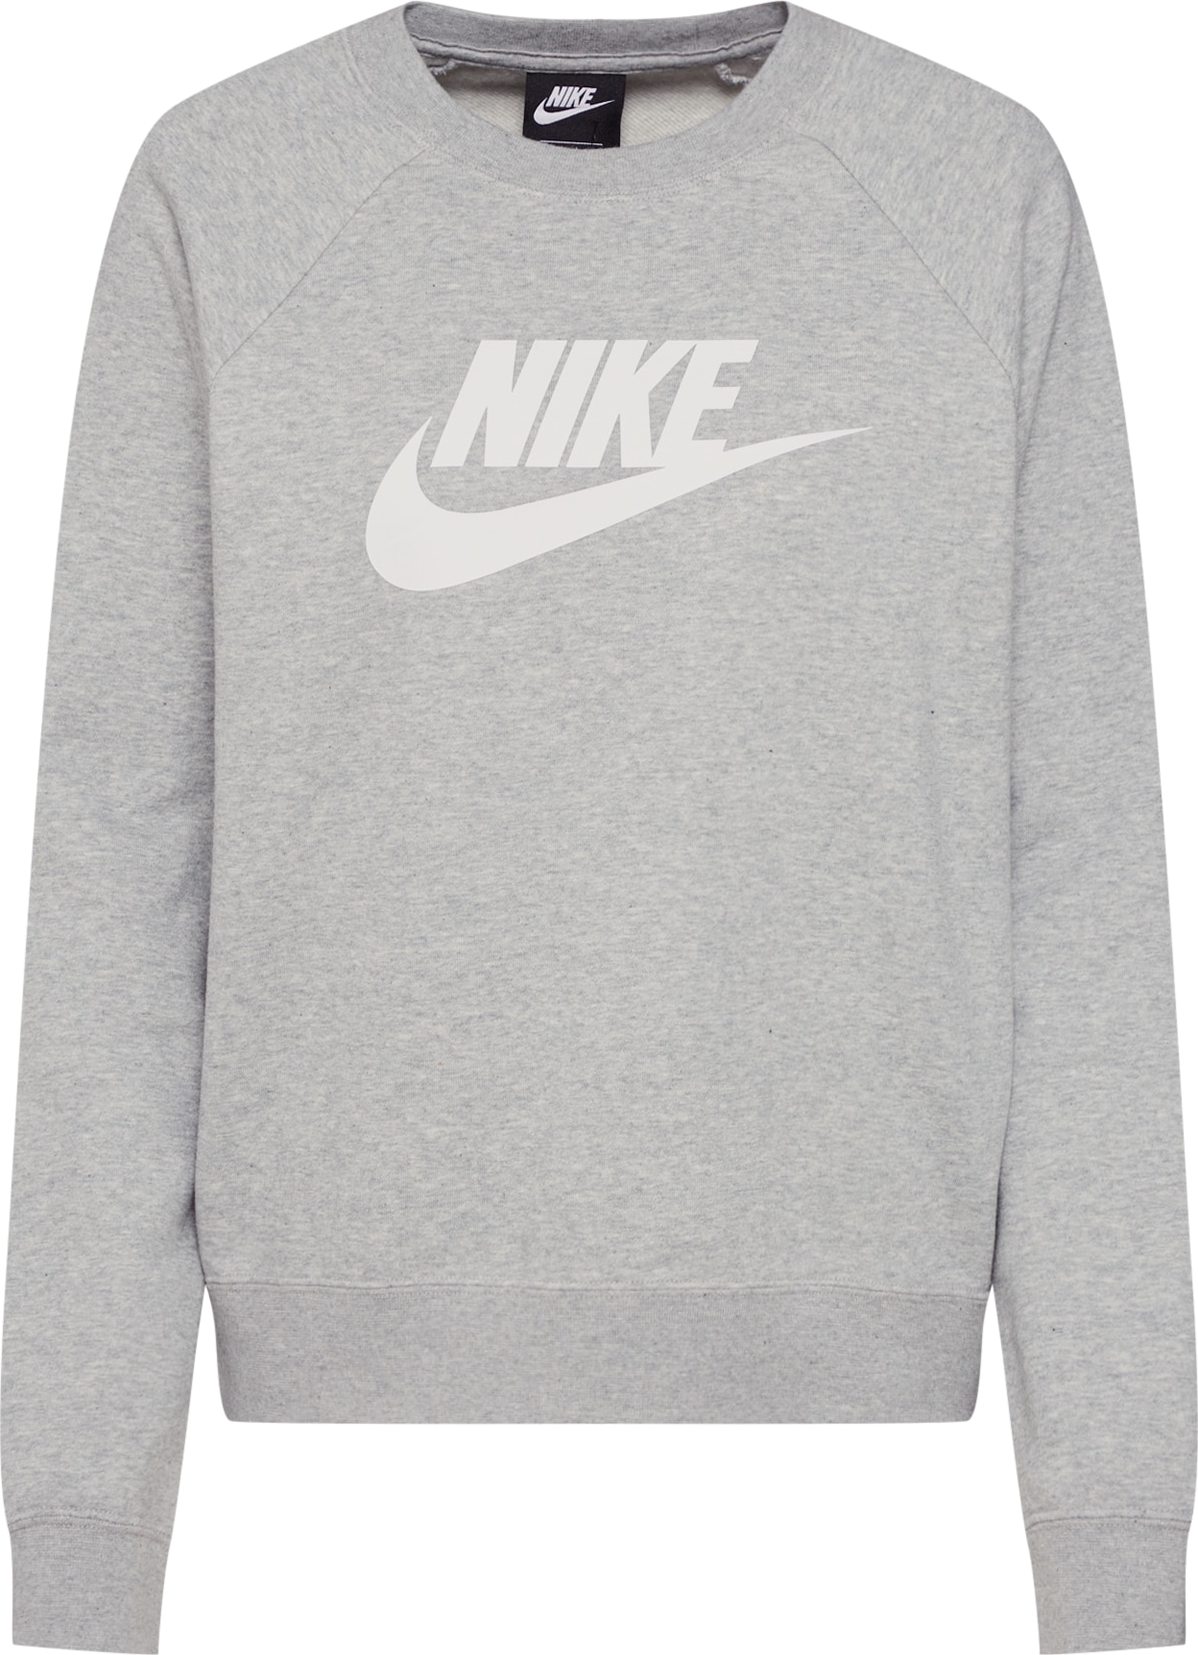 Mikina 'Essentials Crew' Nike Sportswear šedý melír / bílá